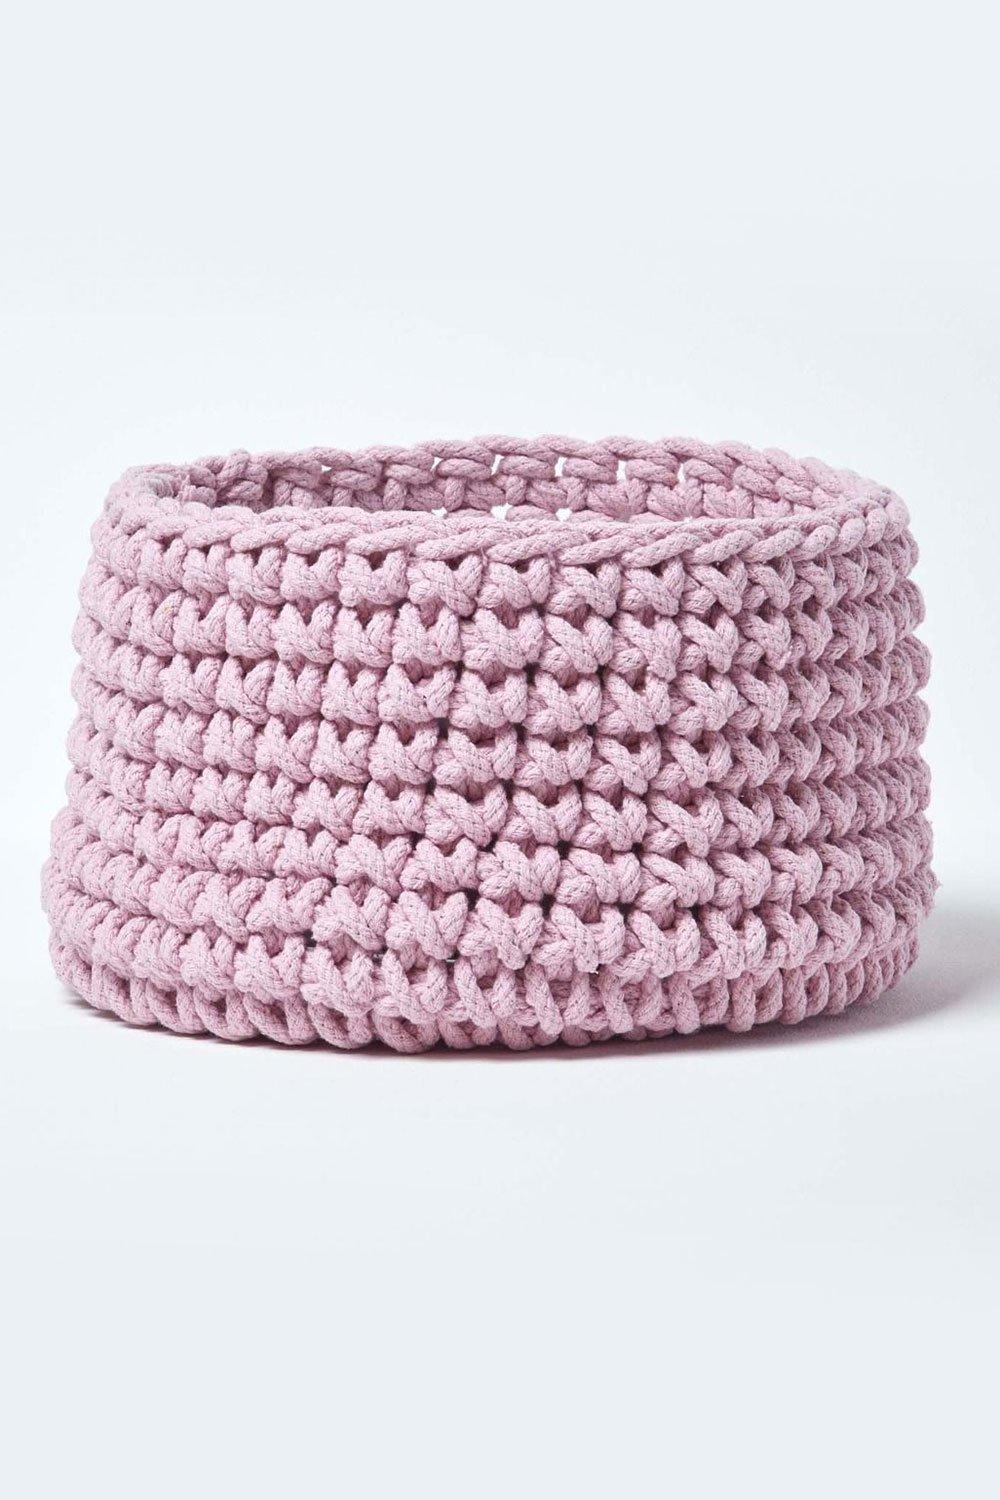 Homescapes Cotton Knitted Round Storage Basket, 37 x 21 cm|bright pink